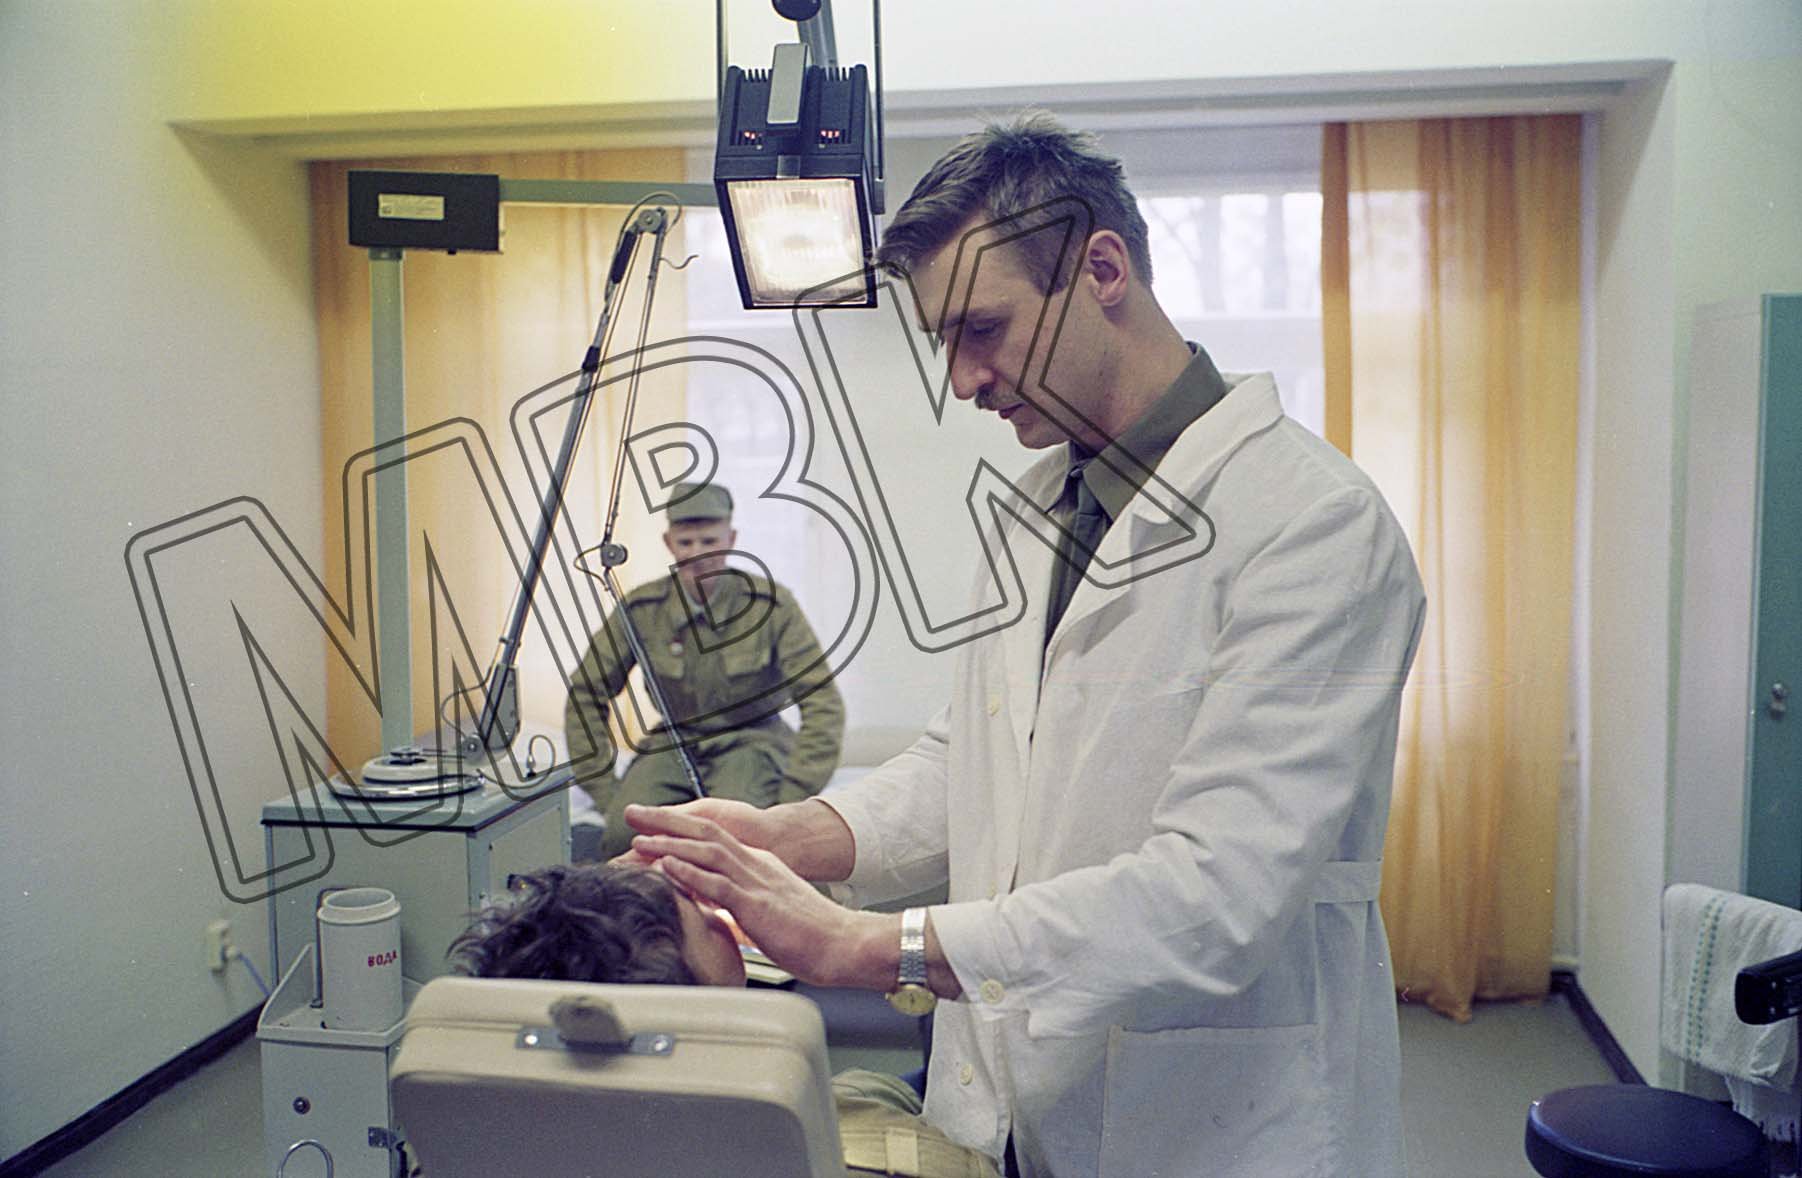 Fotografie: Behandlung beim Zahnarzt, Kaserne Treskowallee, Berlin-Karlshorst, Januar 1994 (Museum Berlin-Karlshorst RR-P)